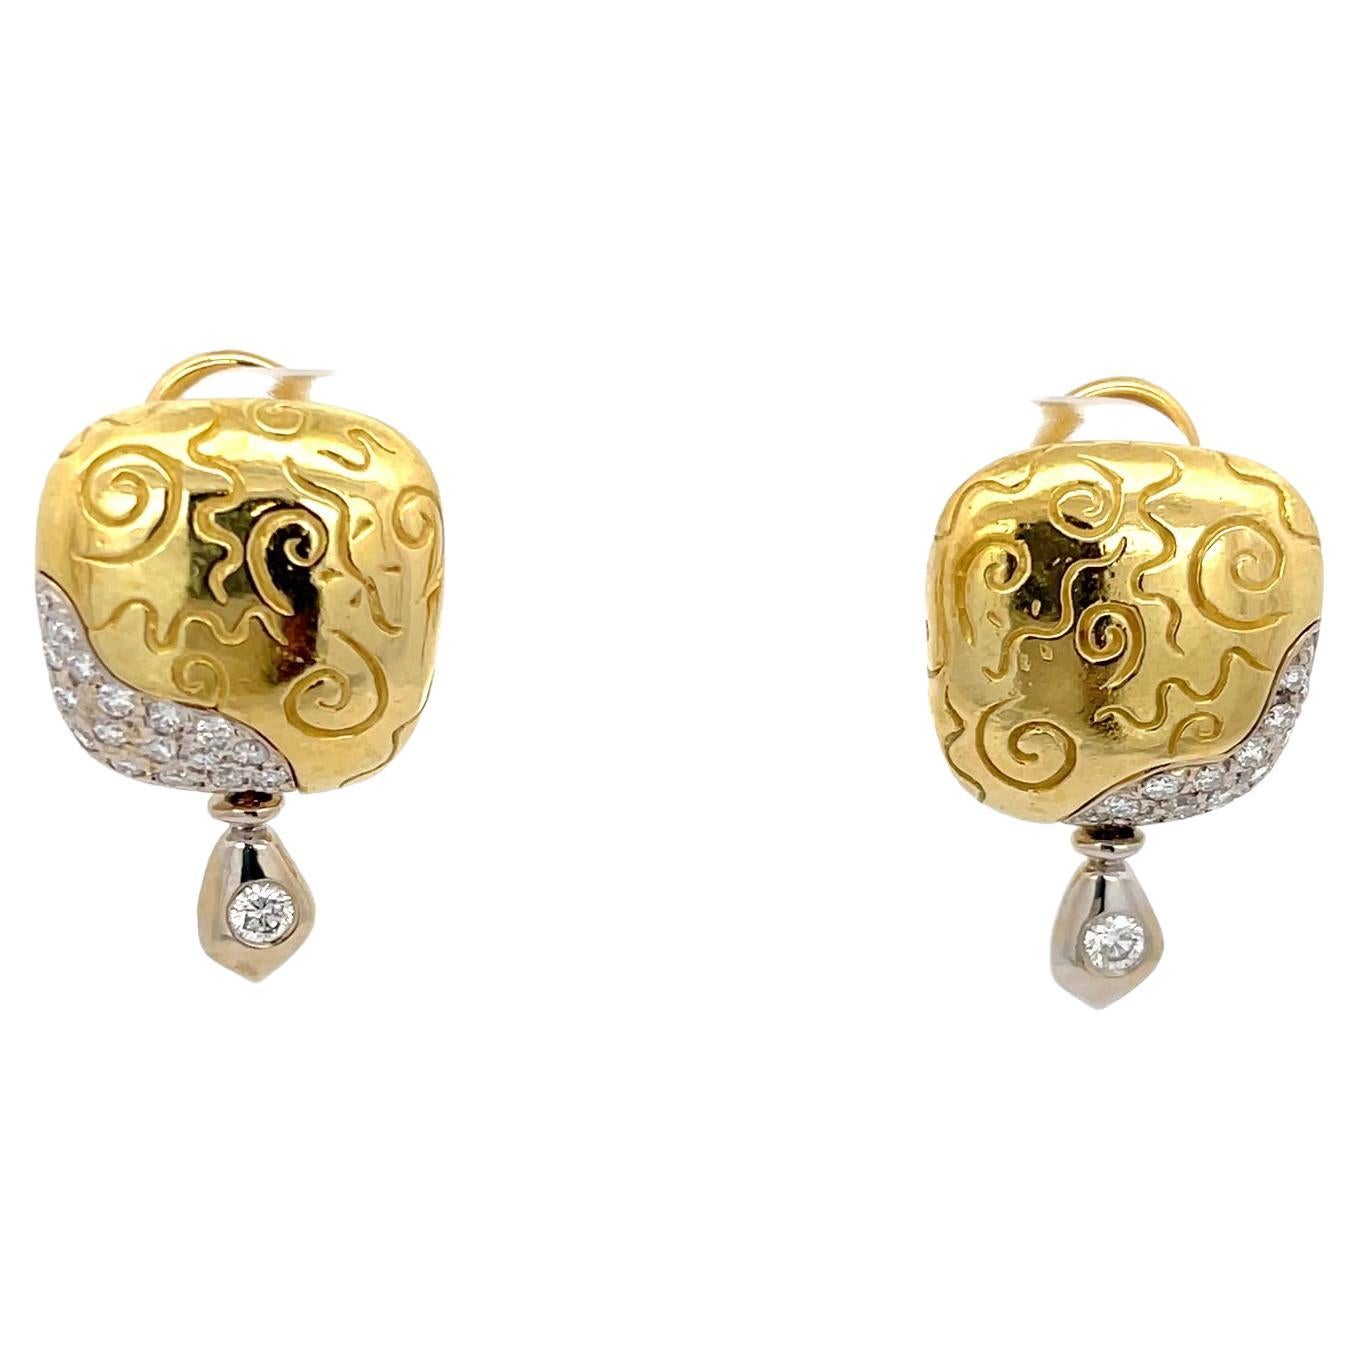 Seidengang Square Dangle Diamond Earrings 18K Yellow & White Gold